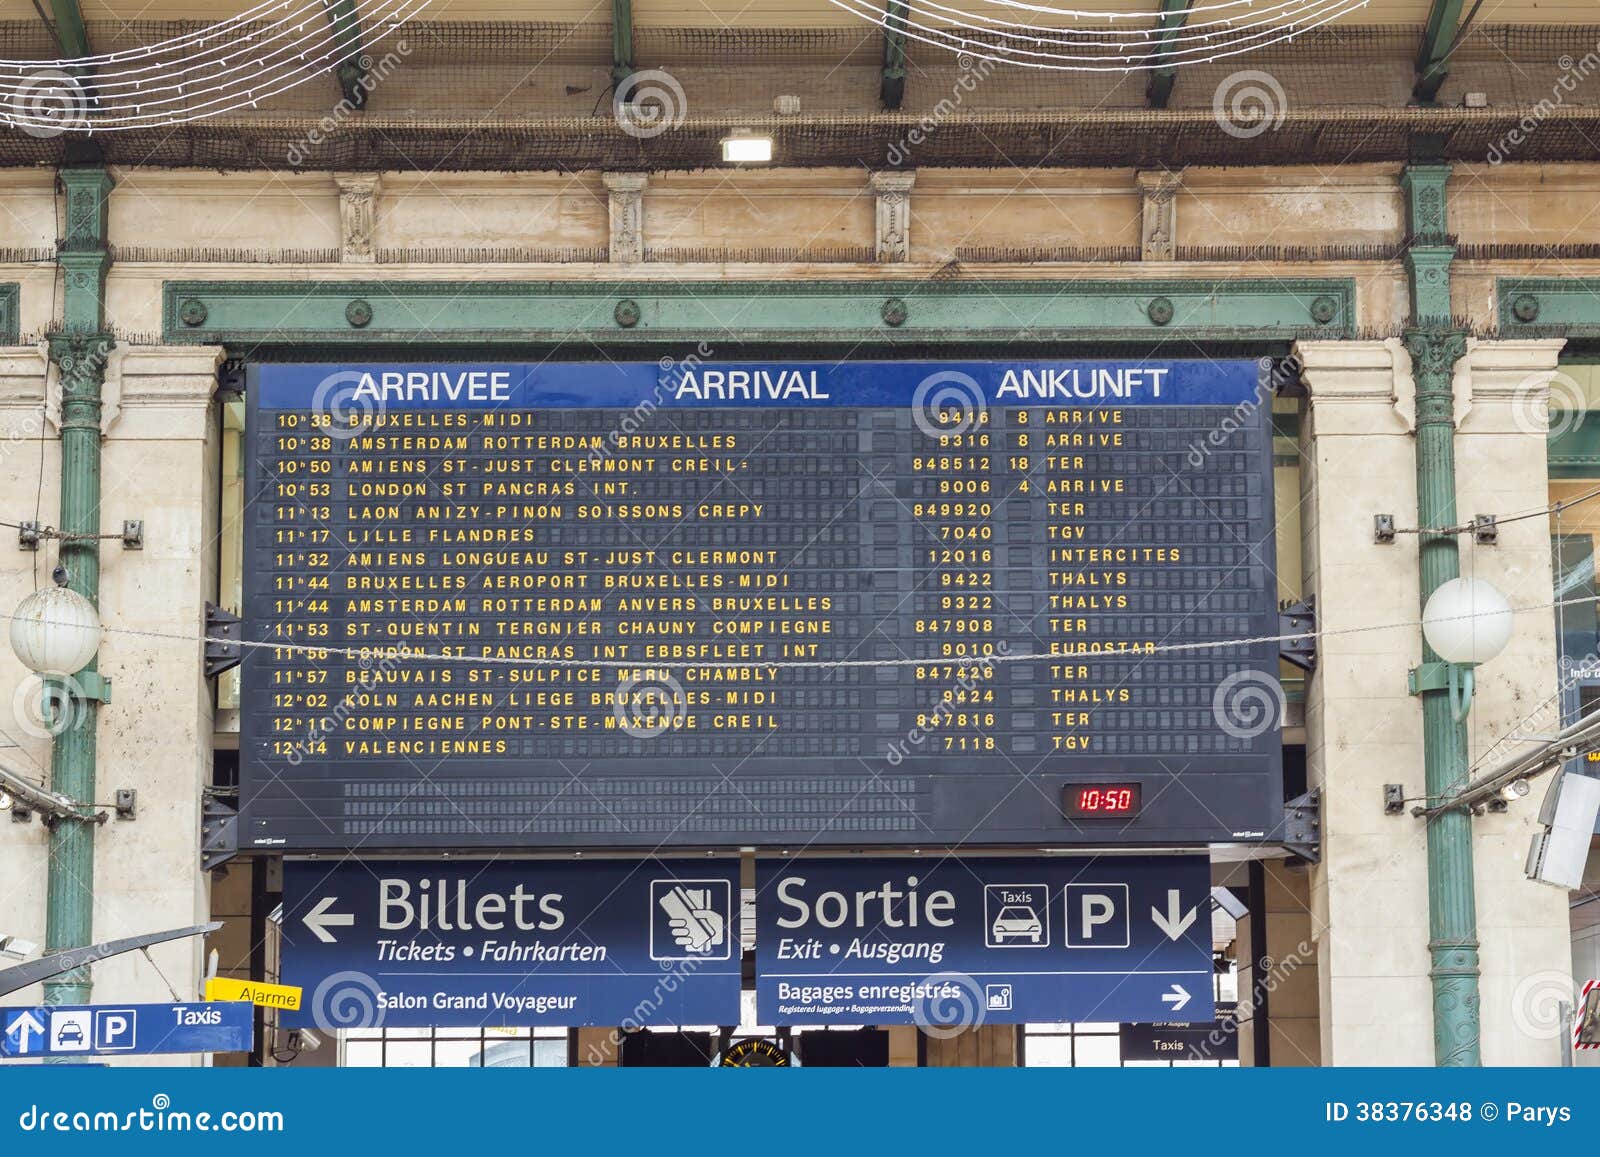 arrival board - gare du nord, paris.